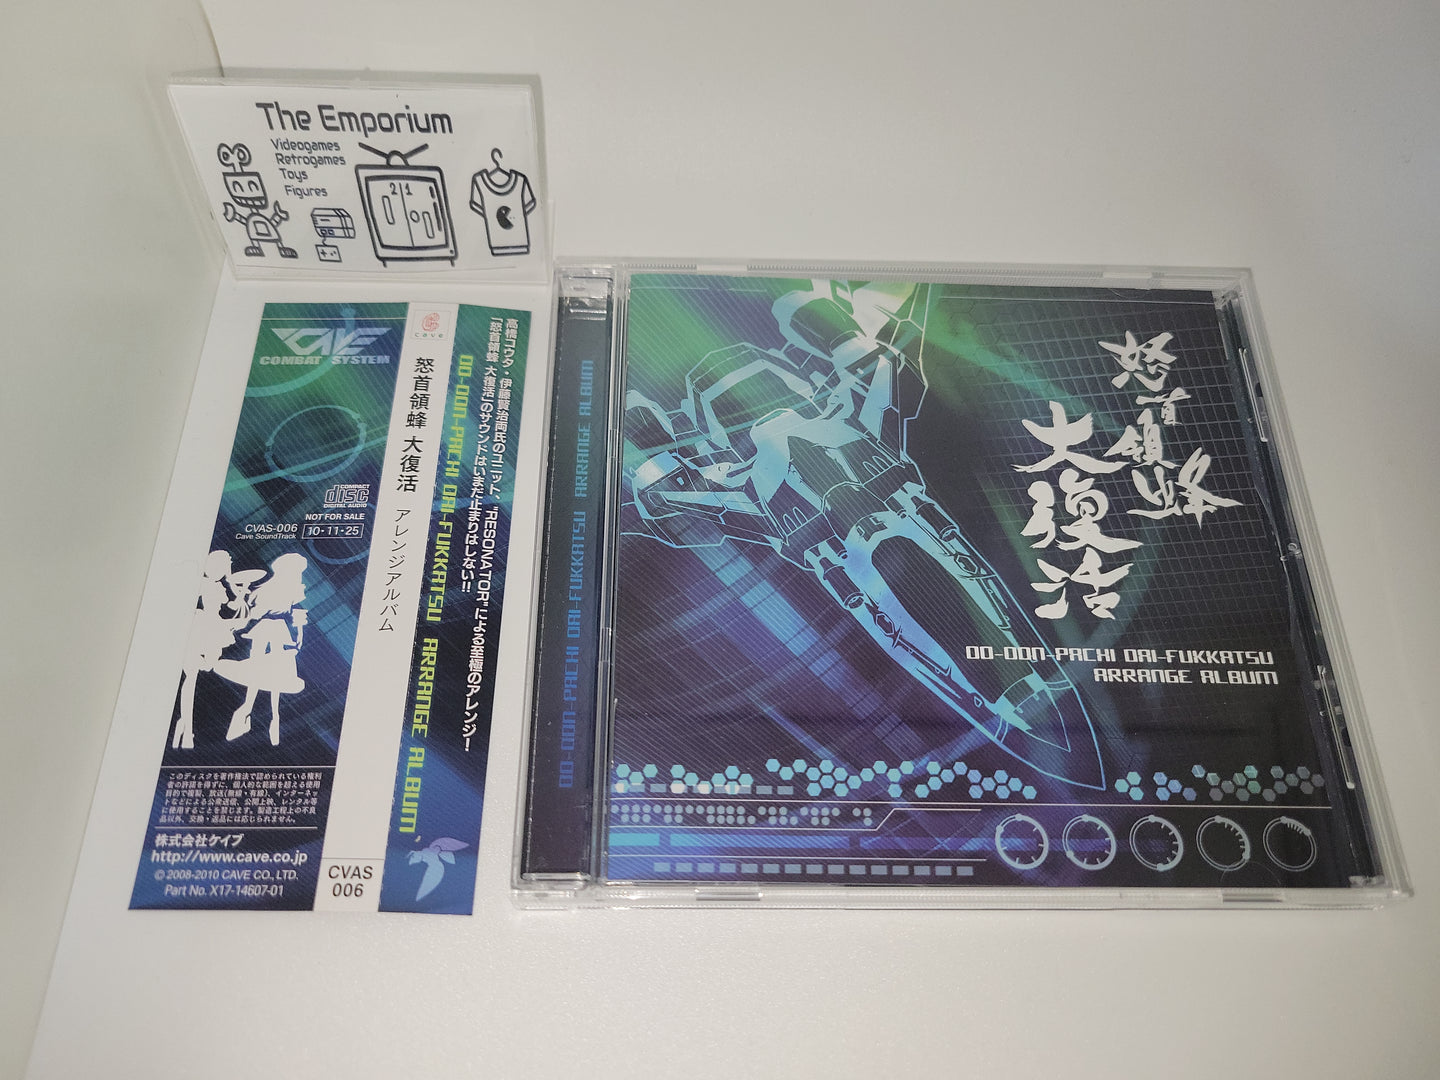 Dodonpachi Daifukkatsu arrange album - Music cd soundtrack